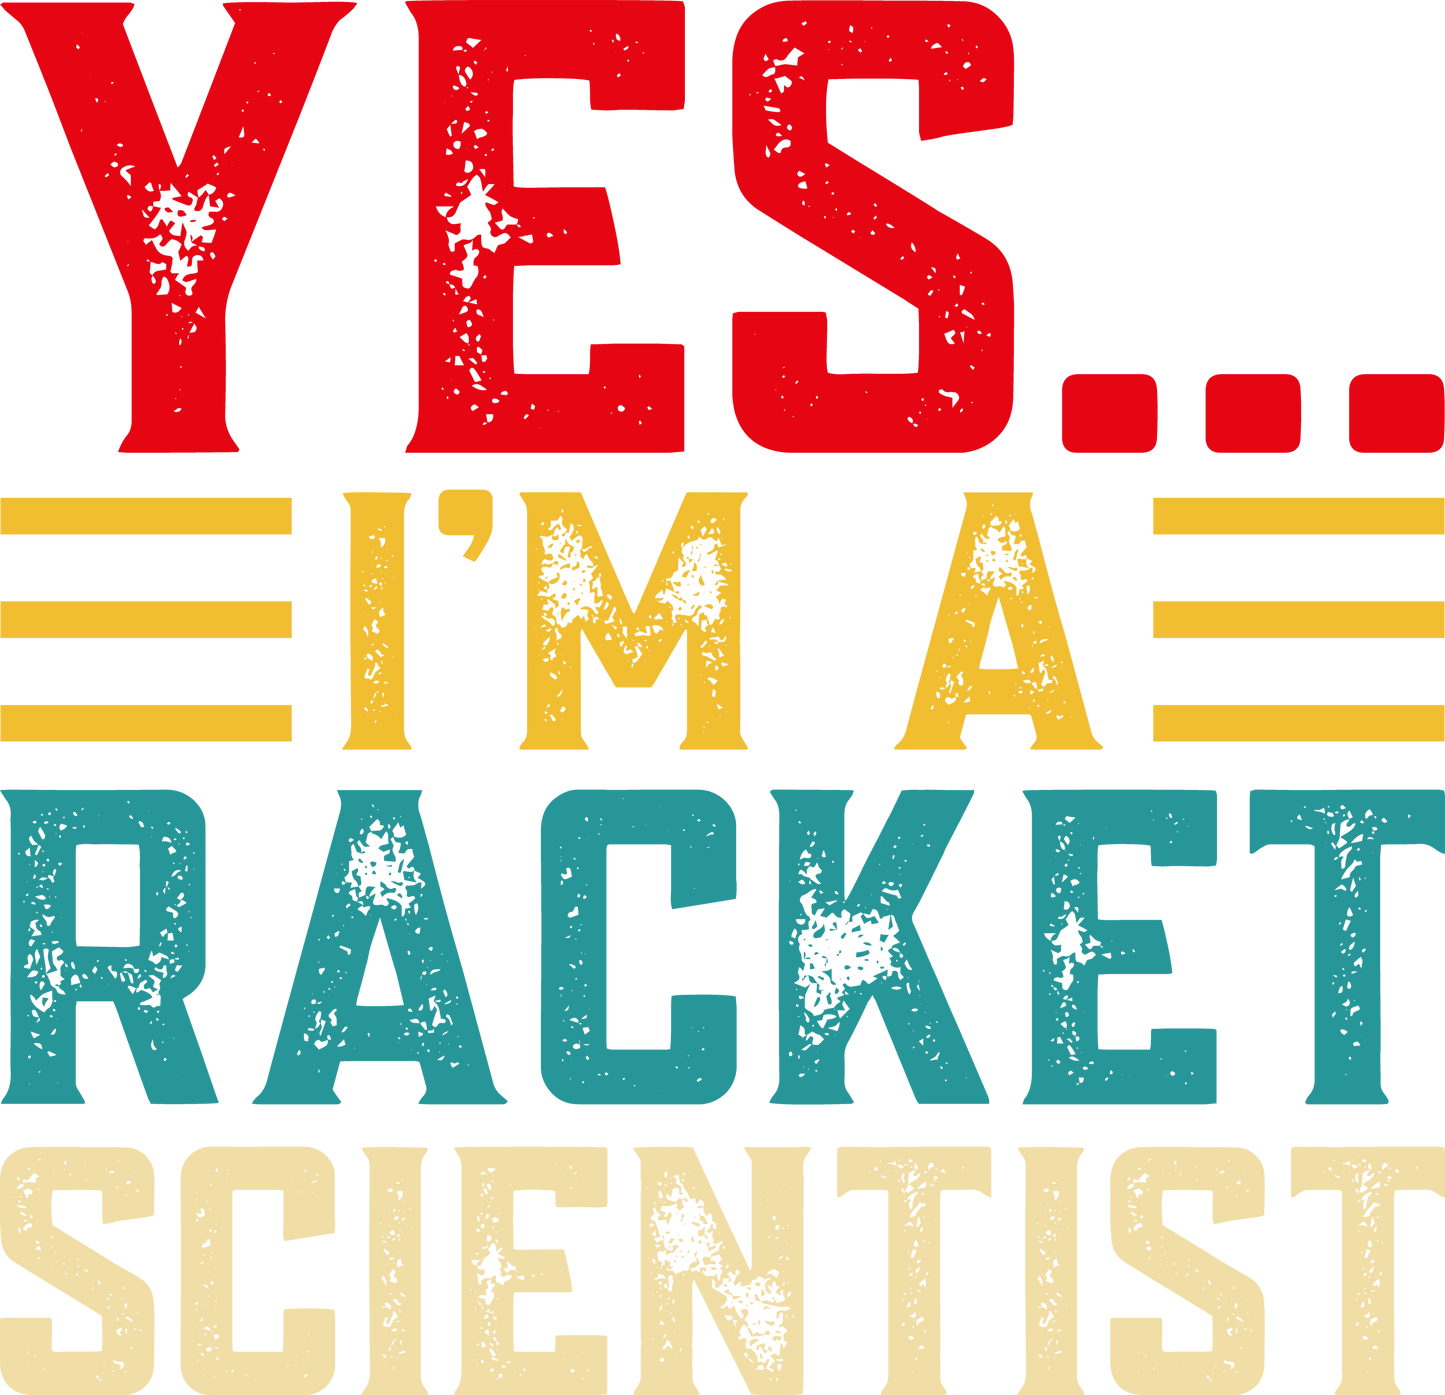 DTF Transfer - Yes I'm a Racket Scientist (TENN22)